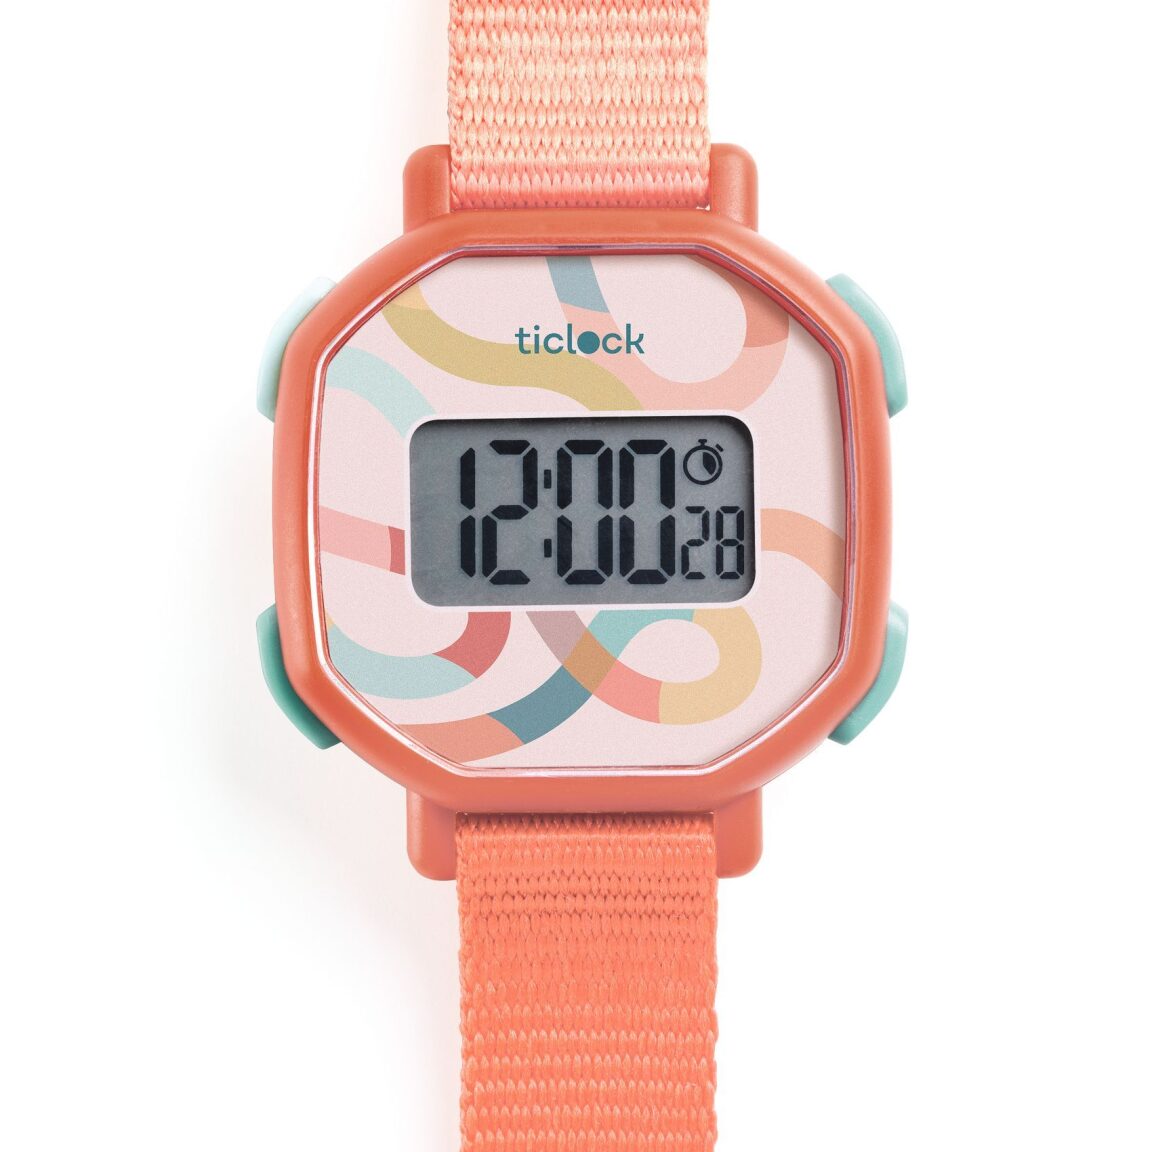 Ticlock Pastel Digital Watch